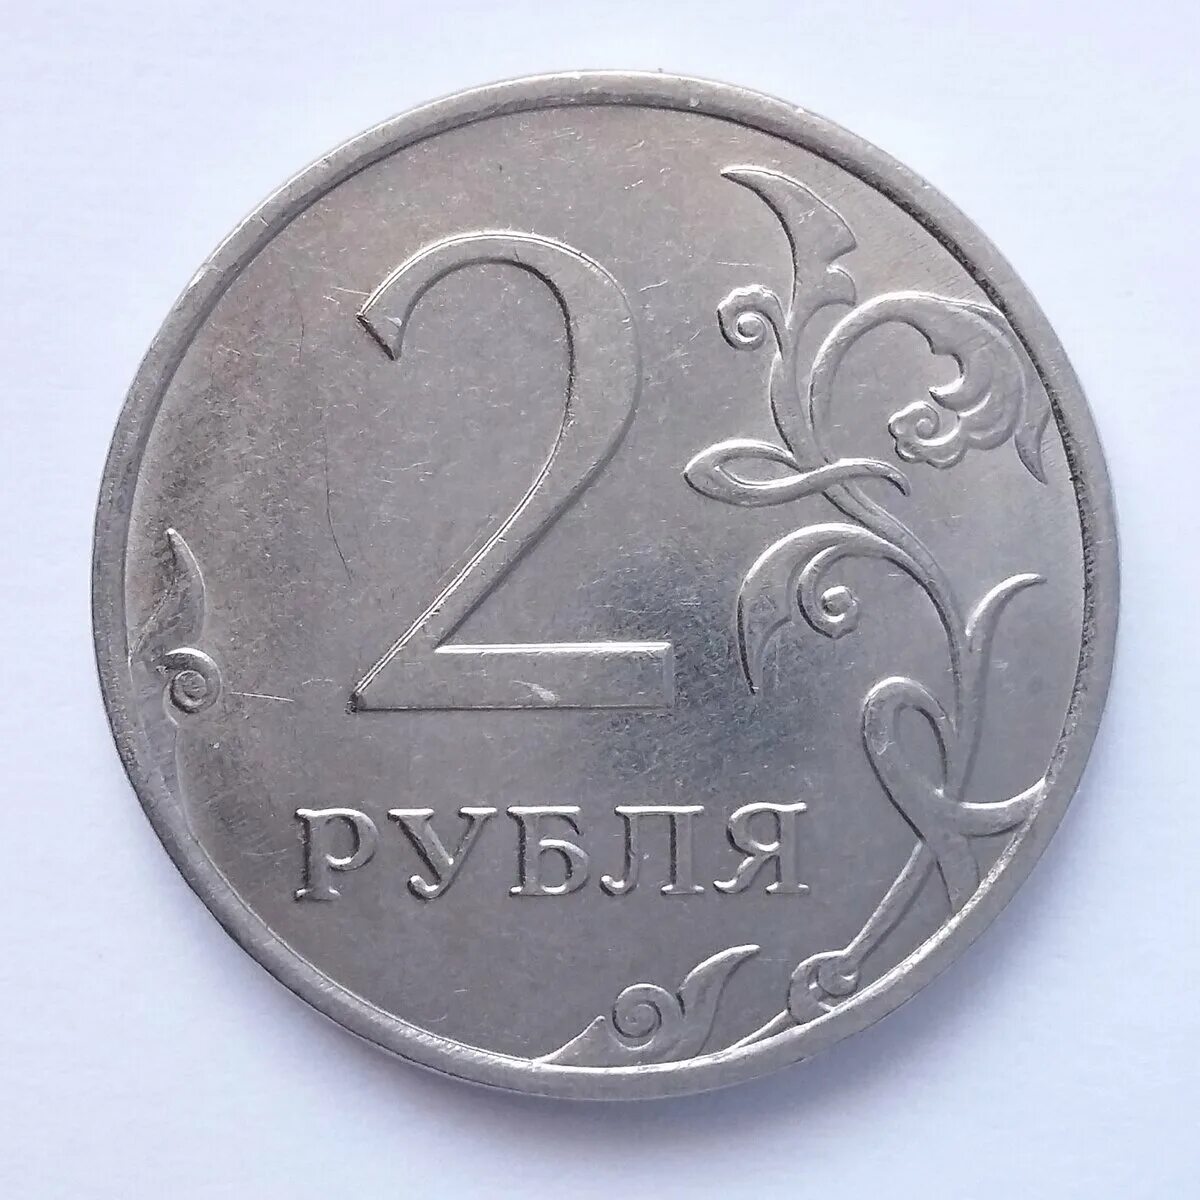 2 рубля цена